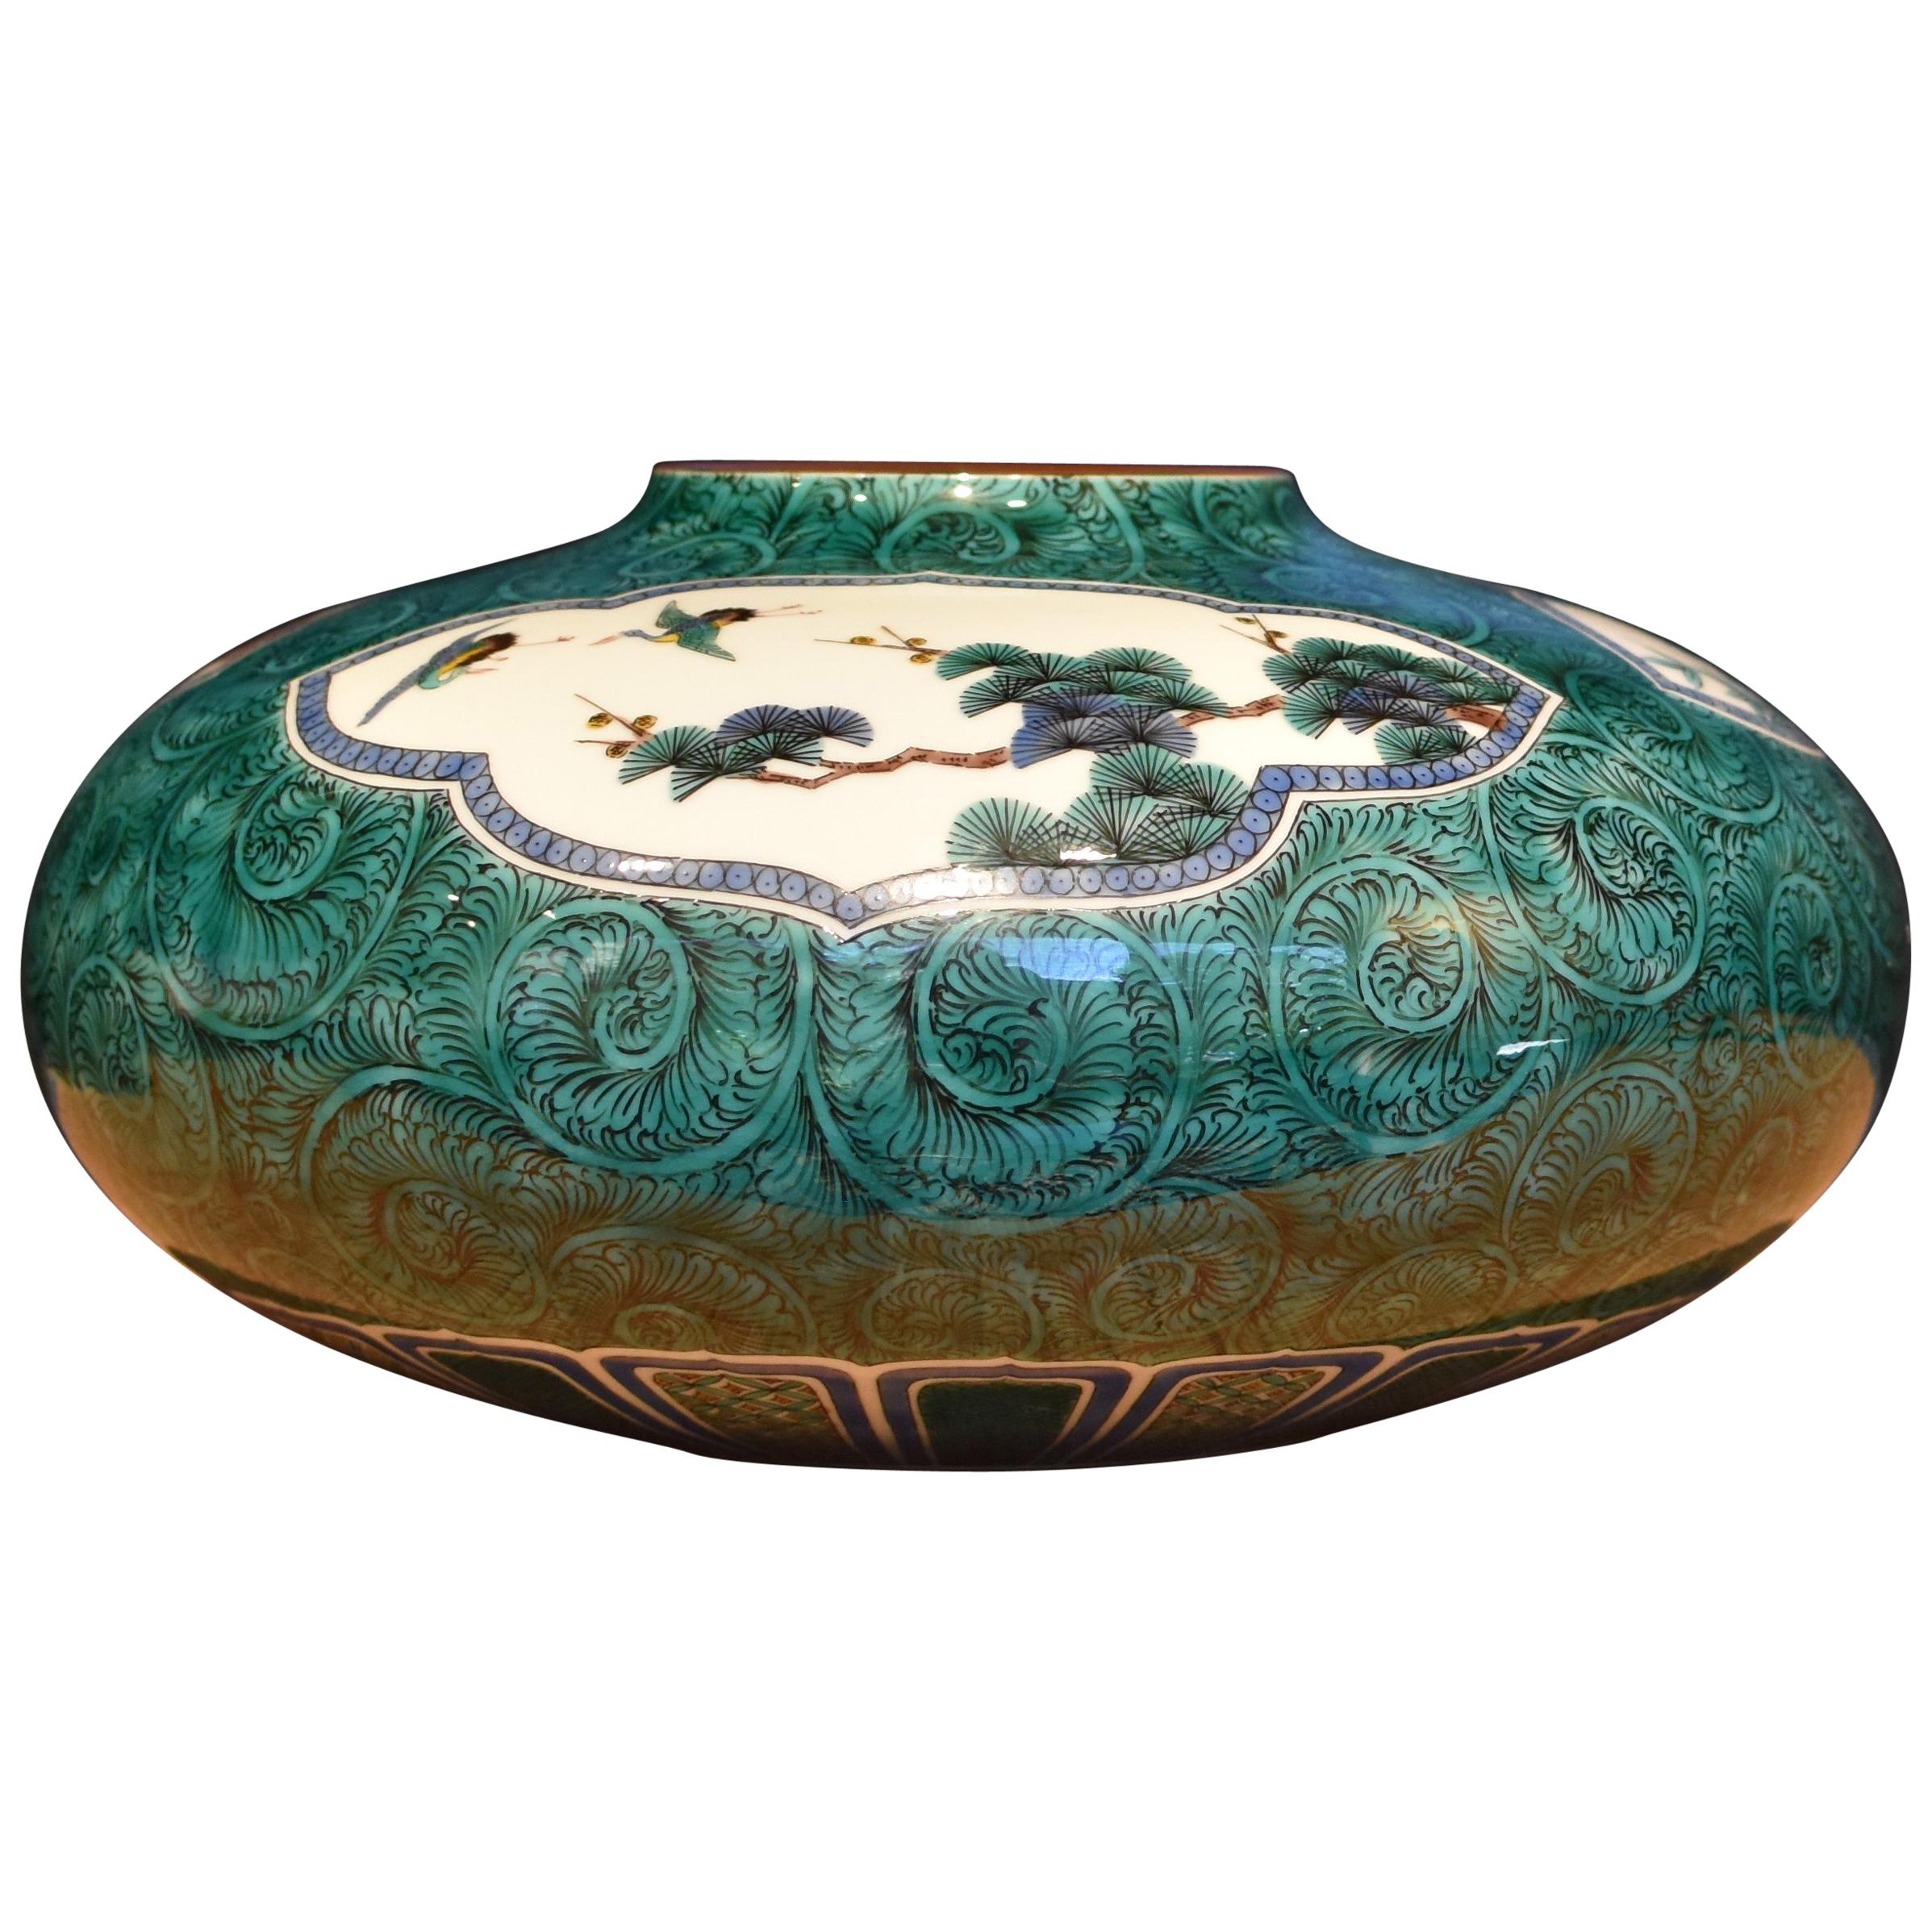 Japanese Contemporary Green Black Porcelain Vase by Master Artist For Sale